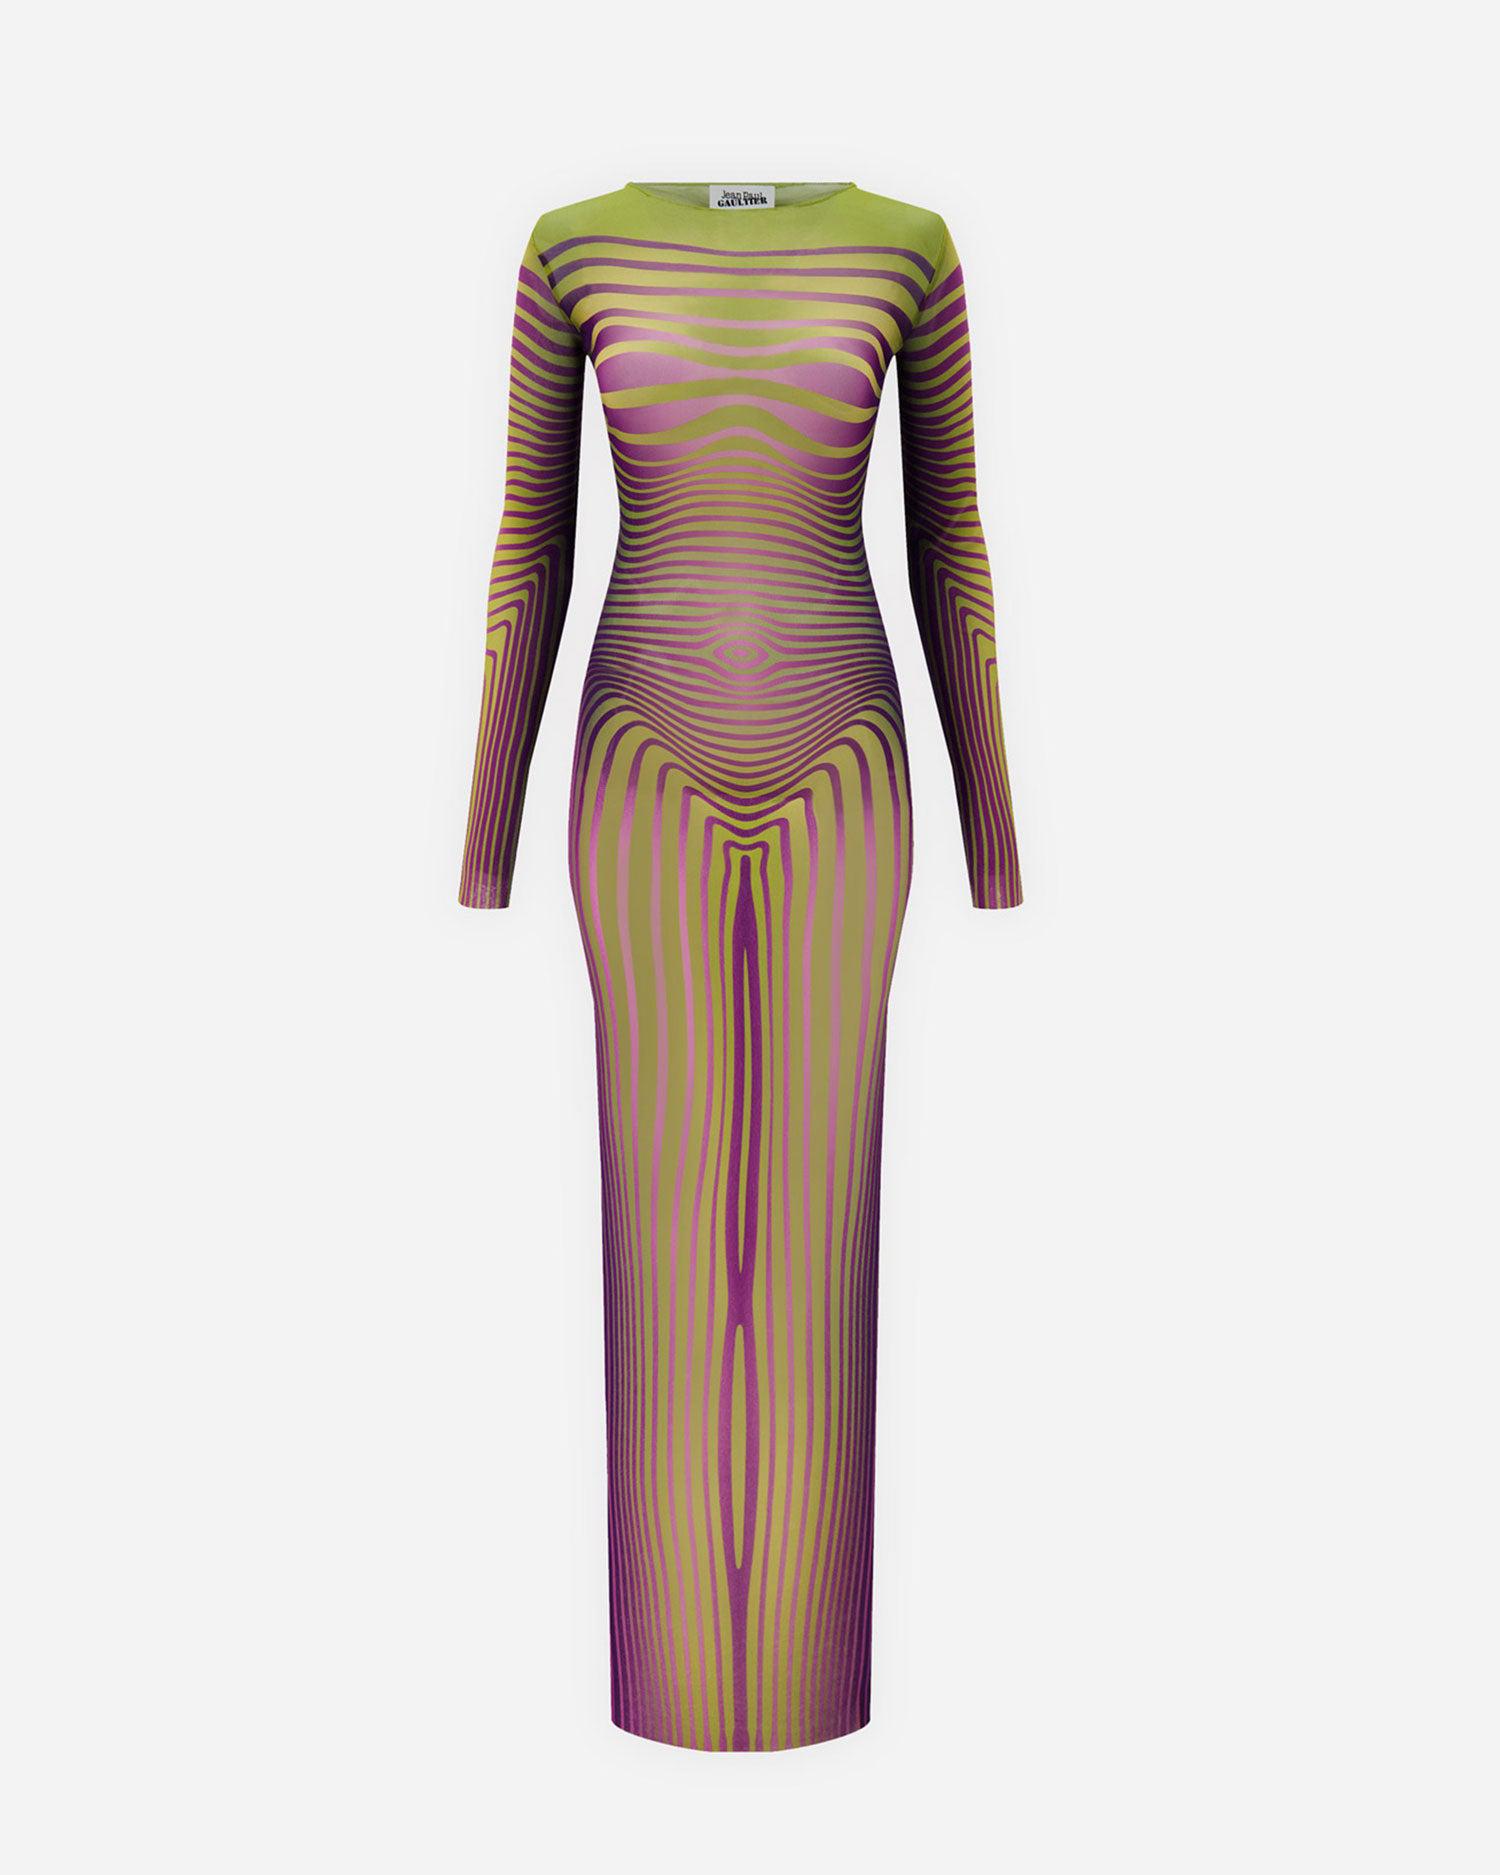 Morphing Stripes Long Dress - Dresses & Skirts - Jean Paul Gaultier - Elevastor